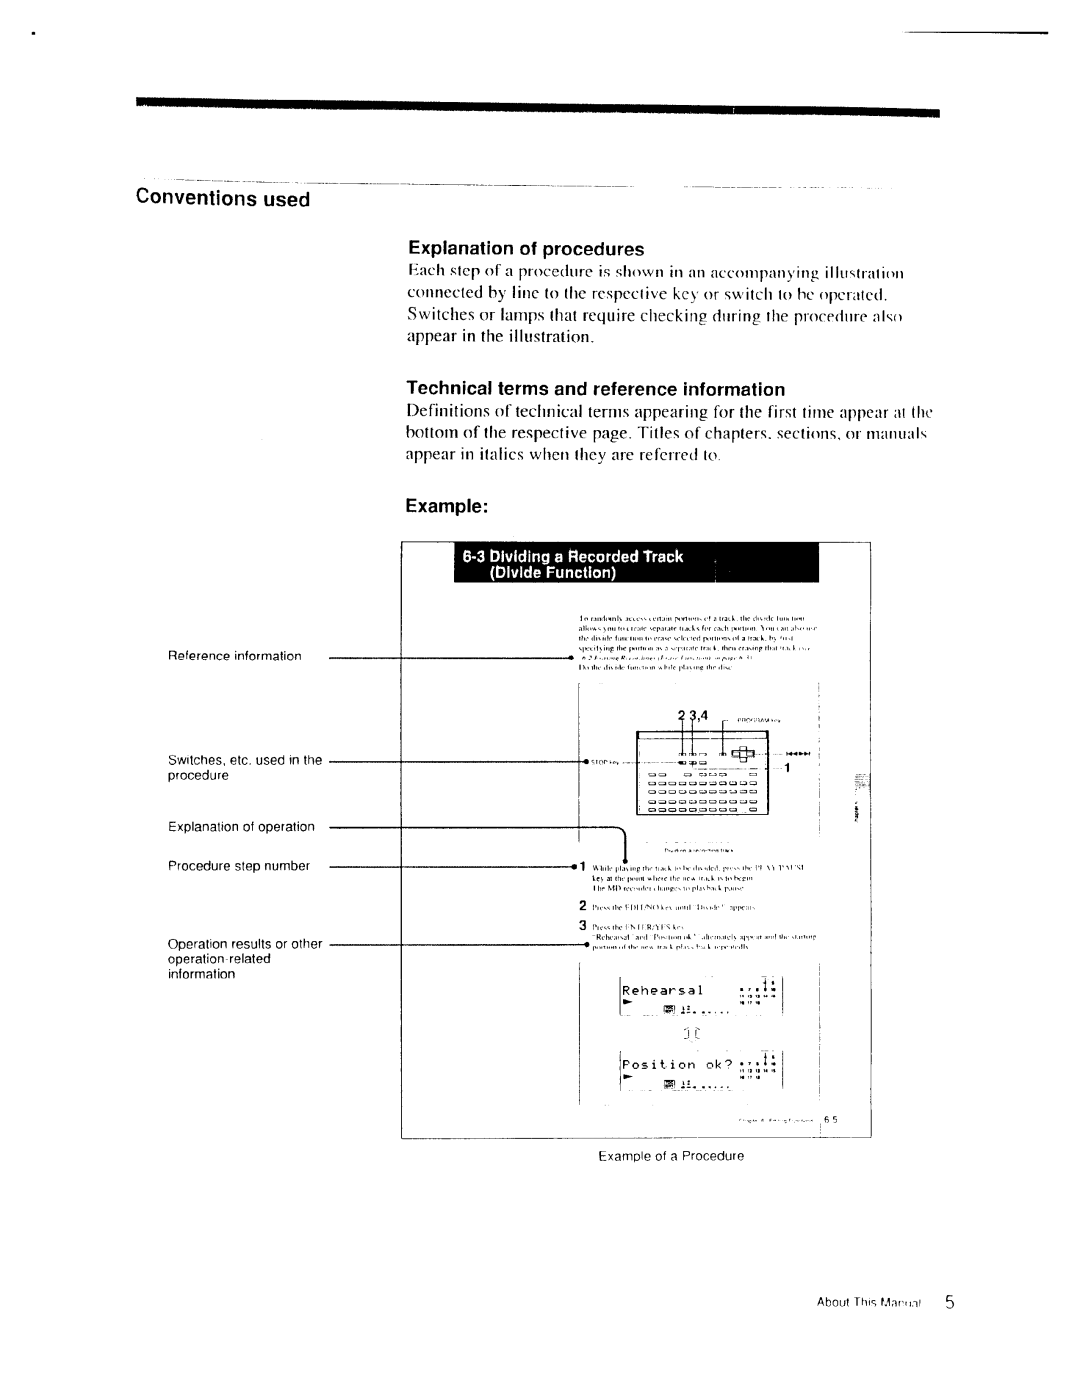 Sony MDS-B1 manual 